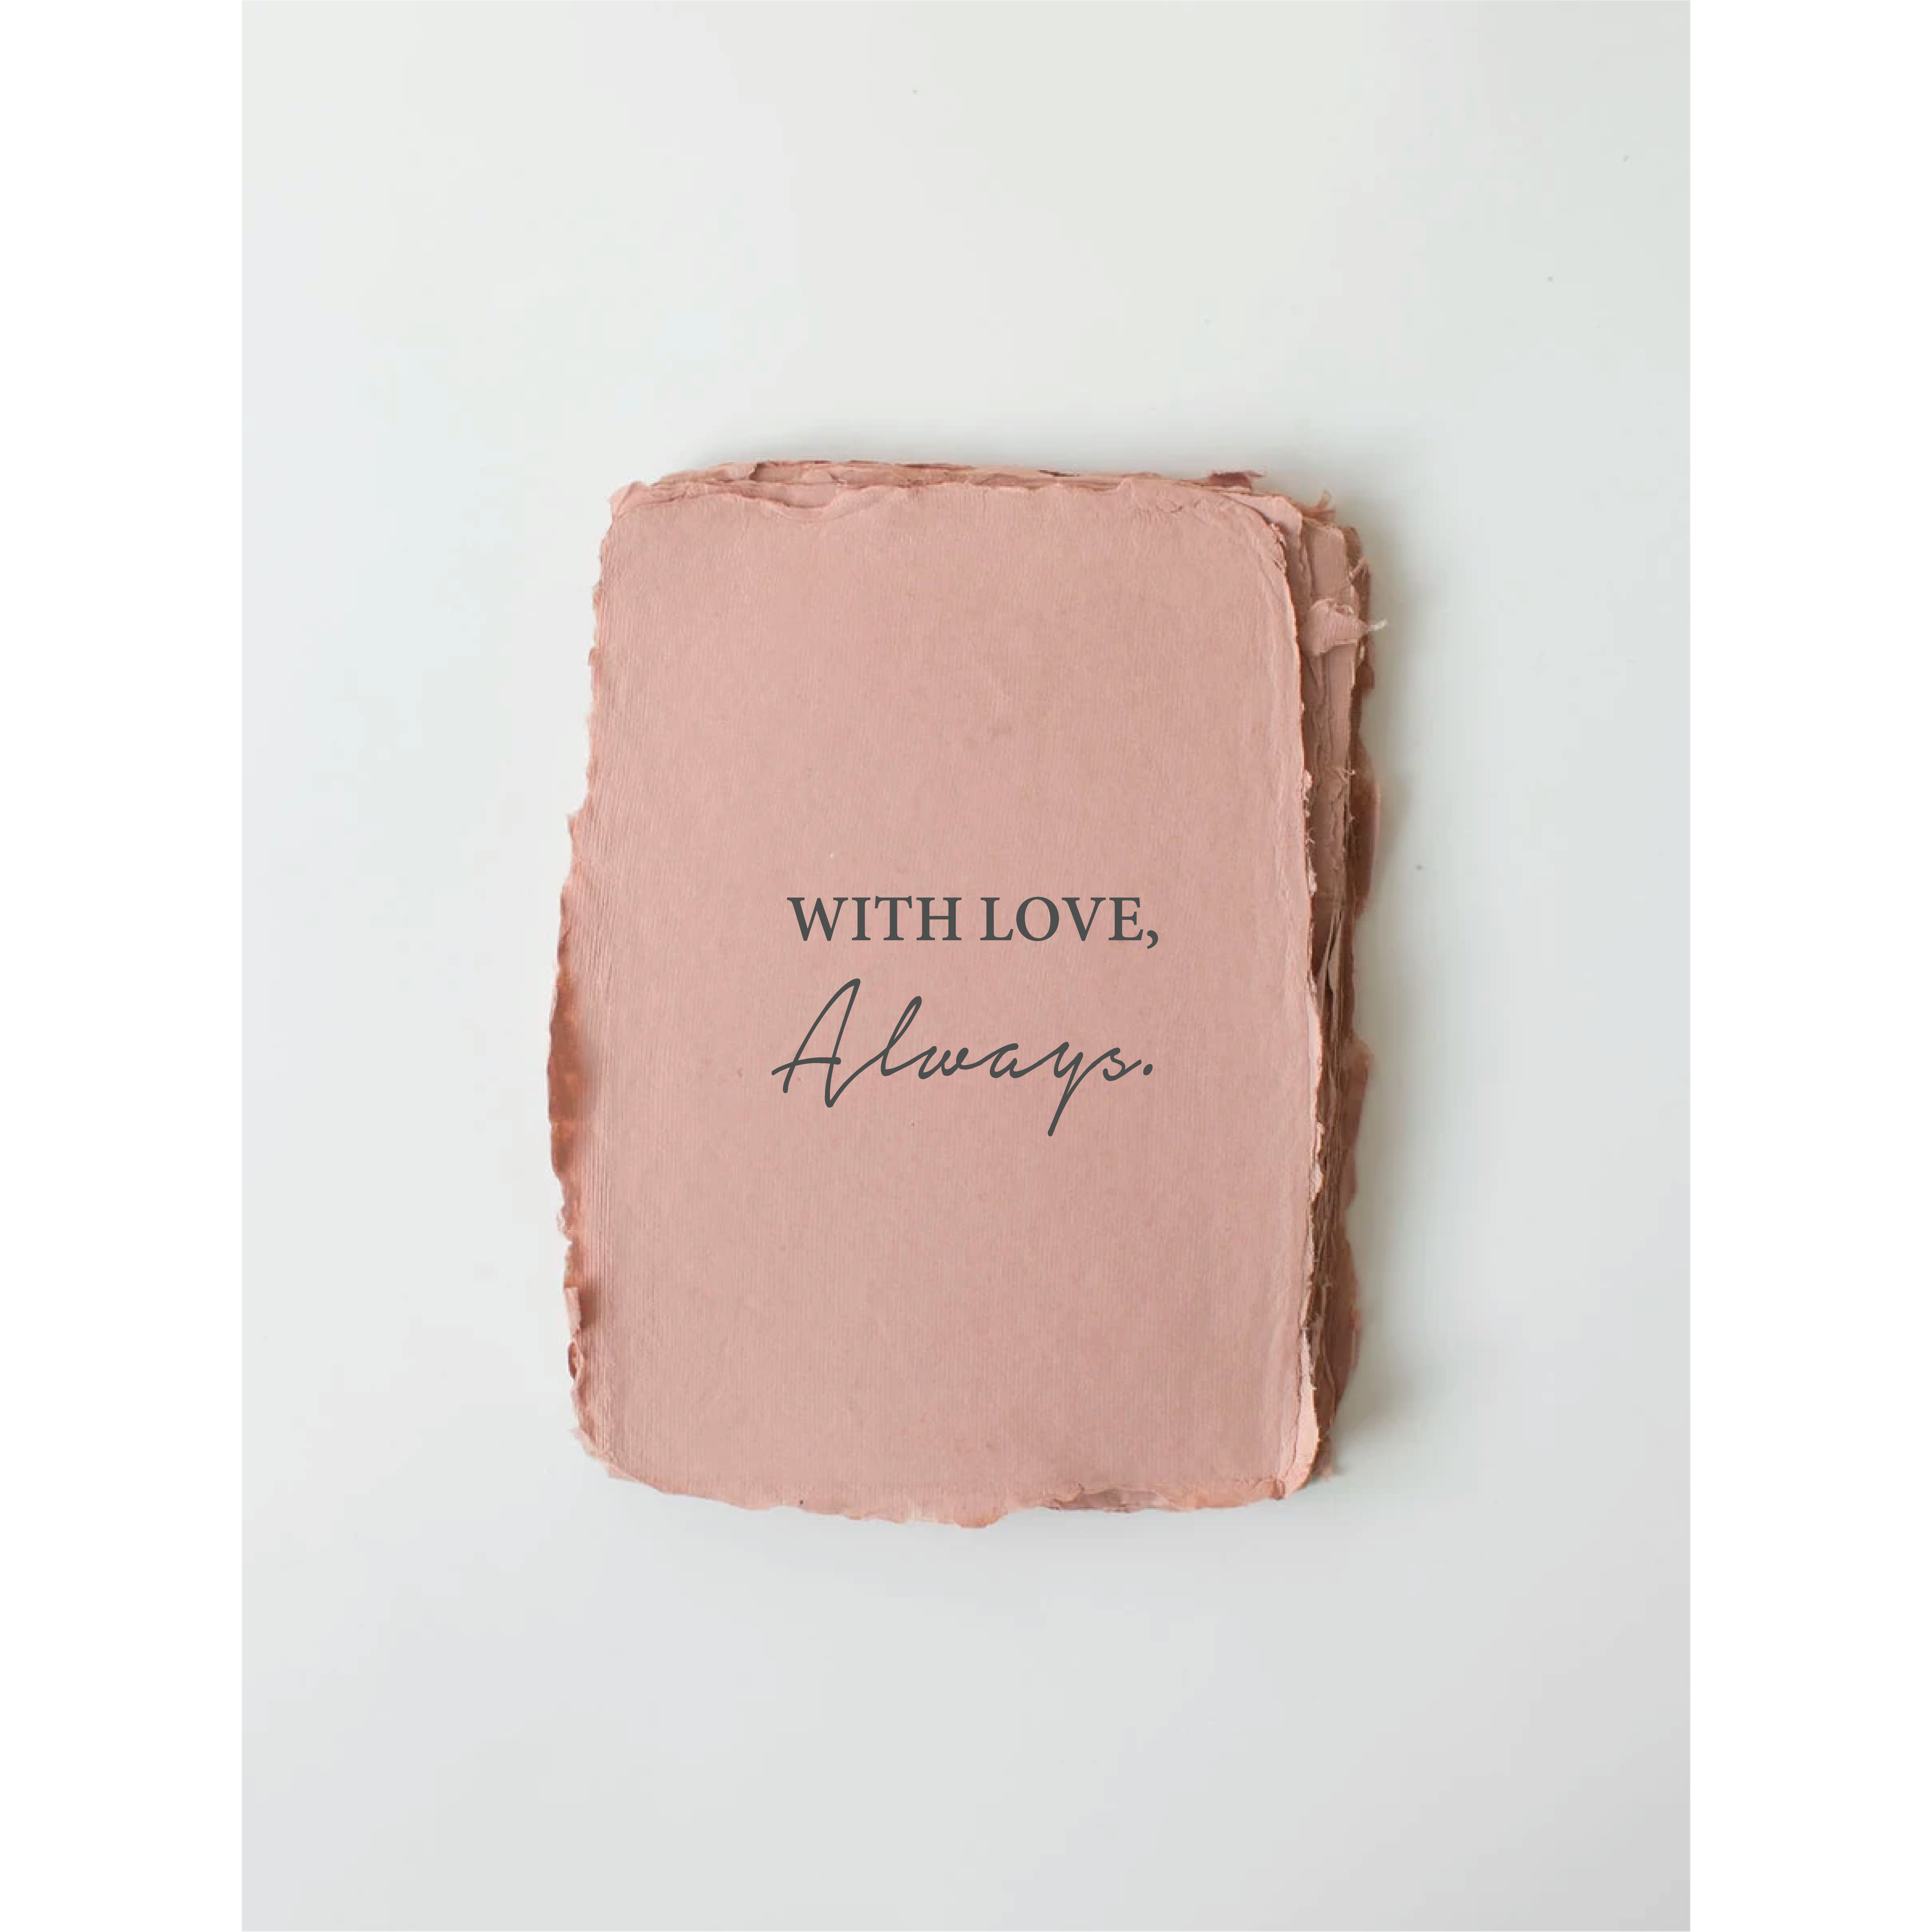 "With Love, Always." Love/Friendship Card